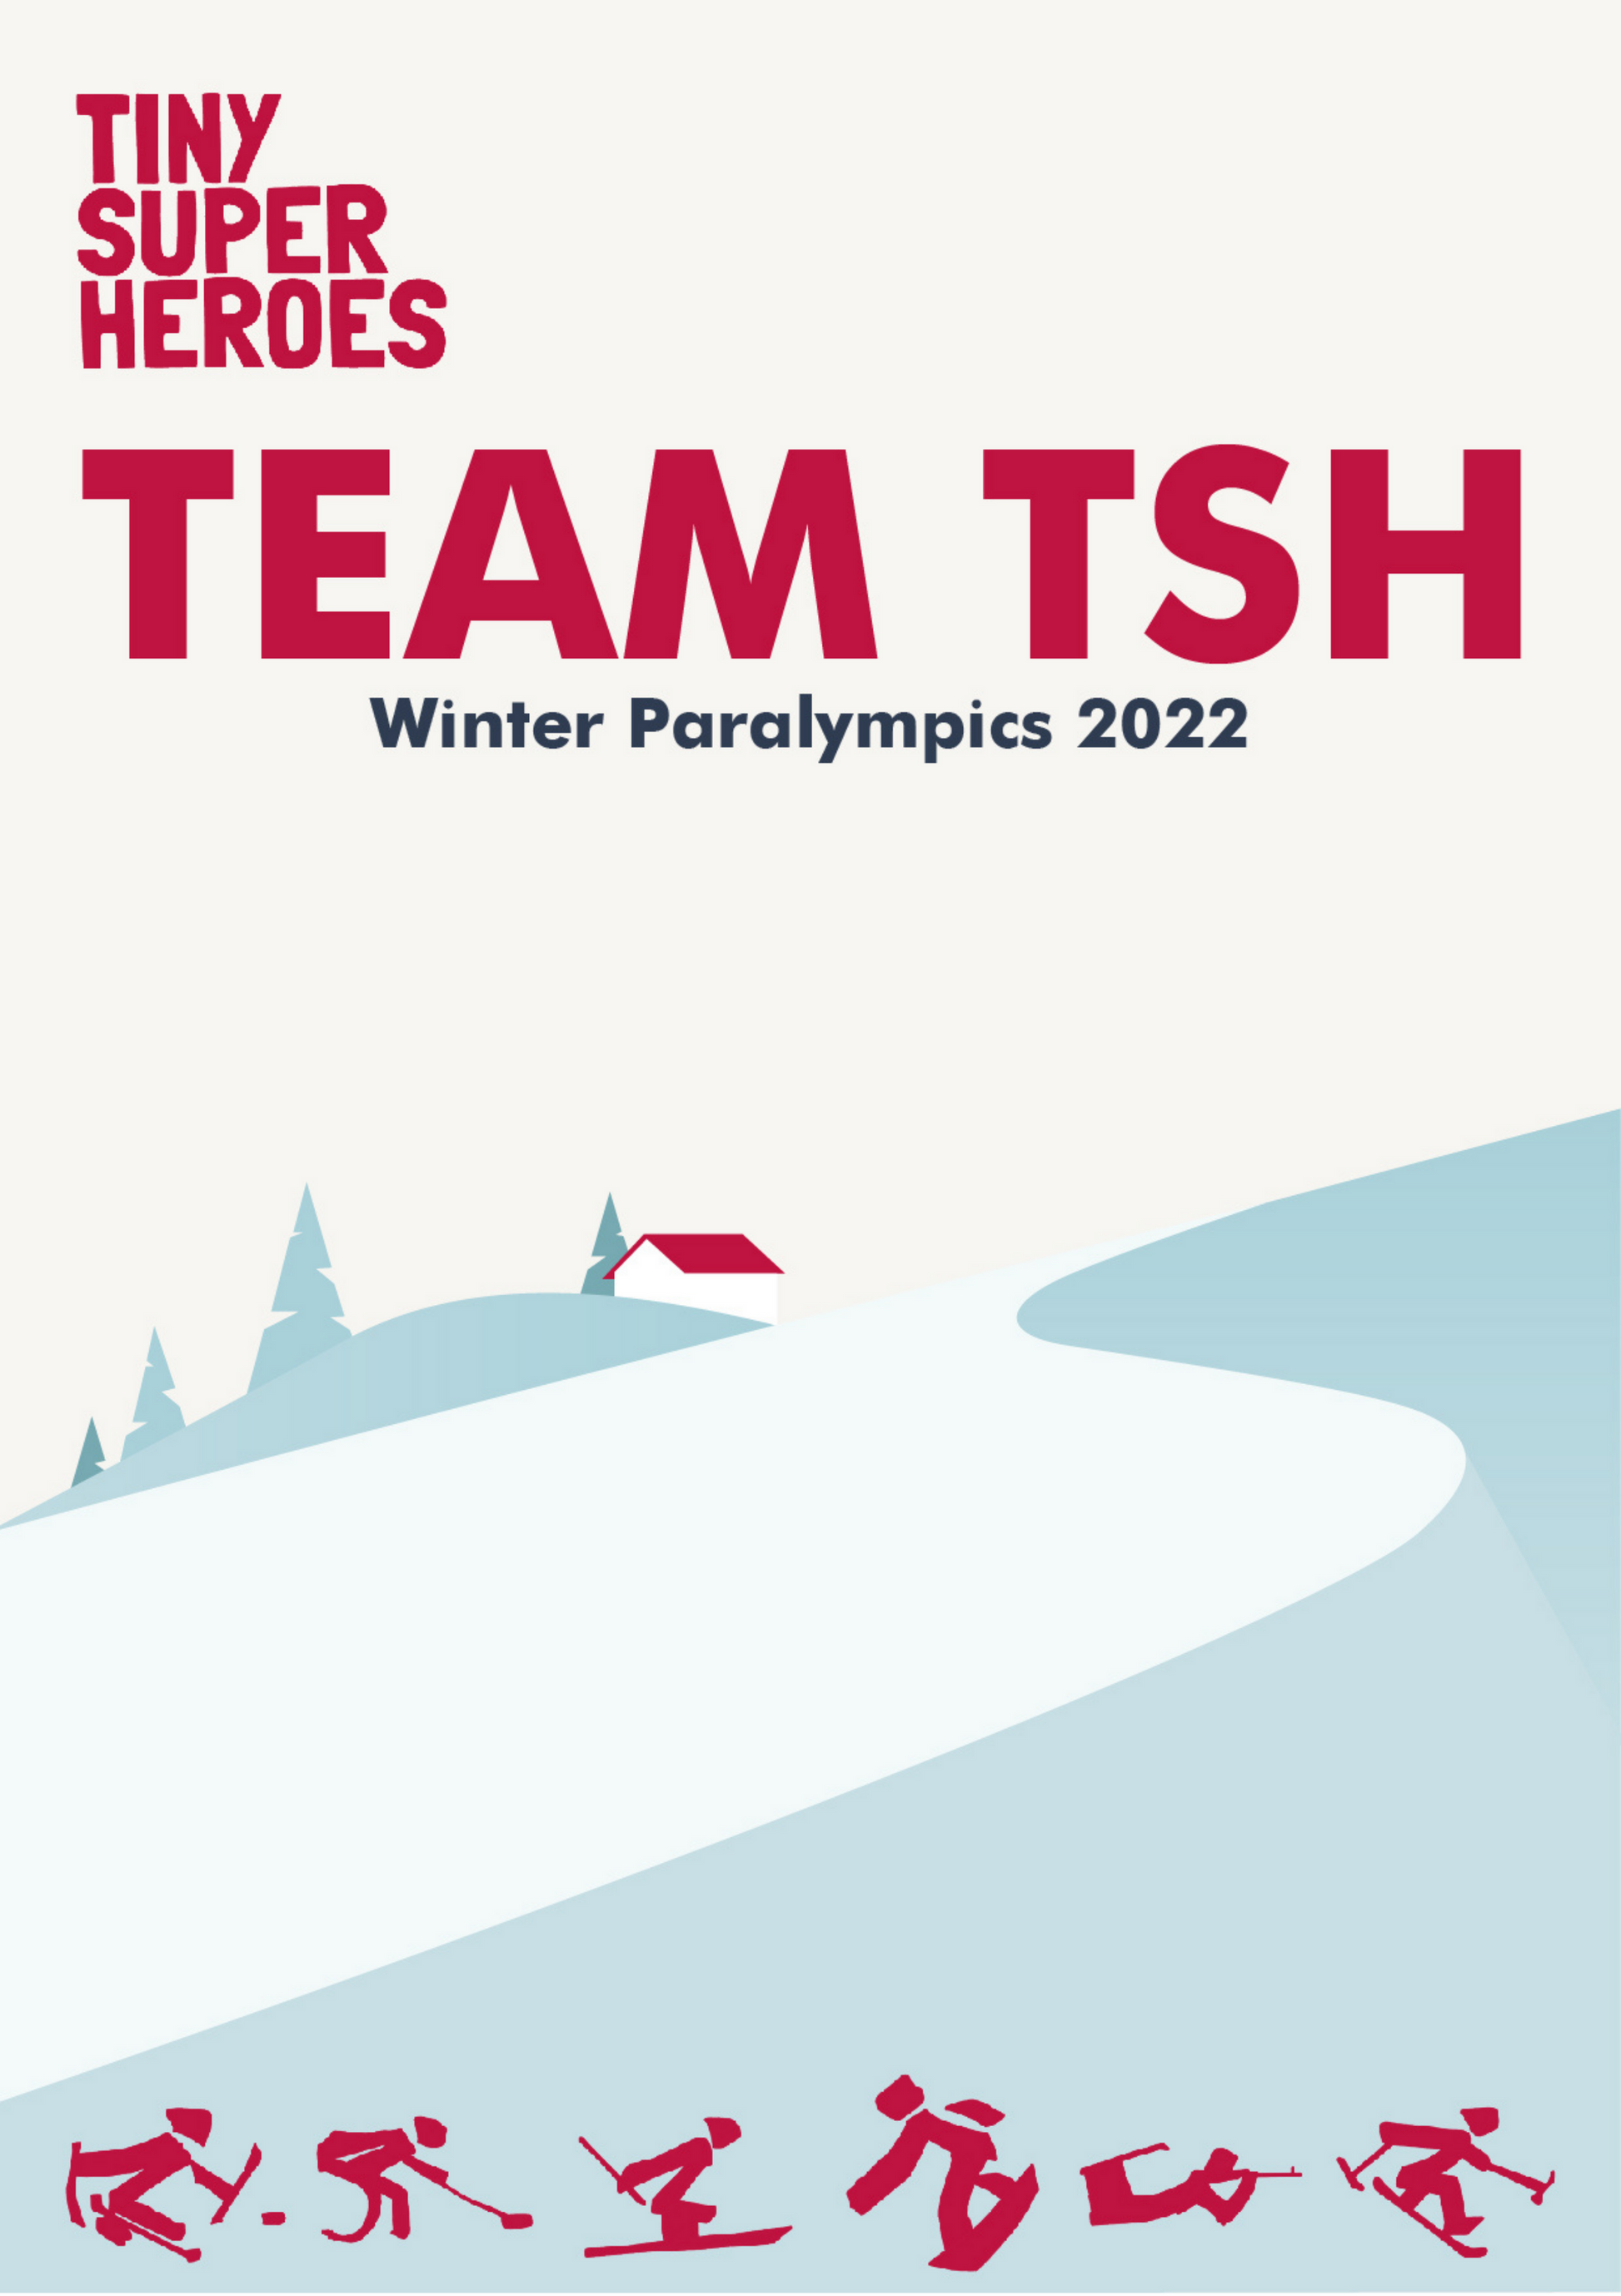 Team TSH Winter Paralympic 2022 Poster - TinySuperheroes